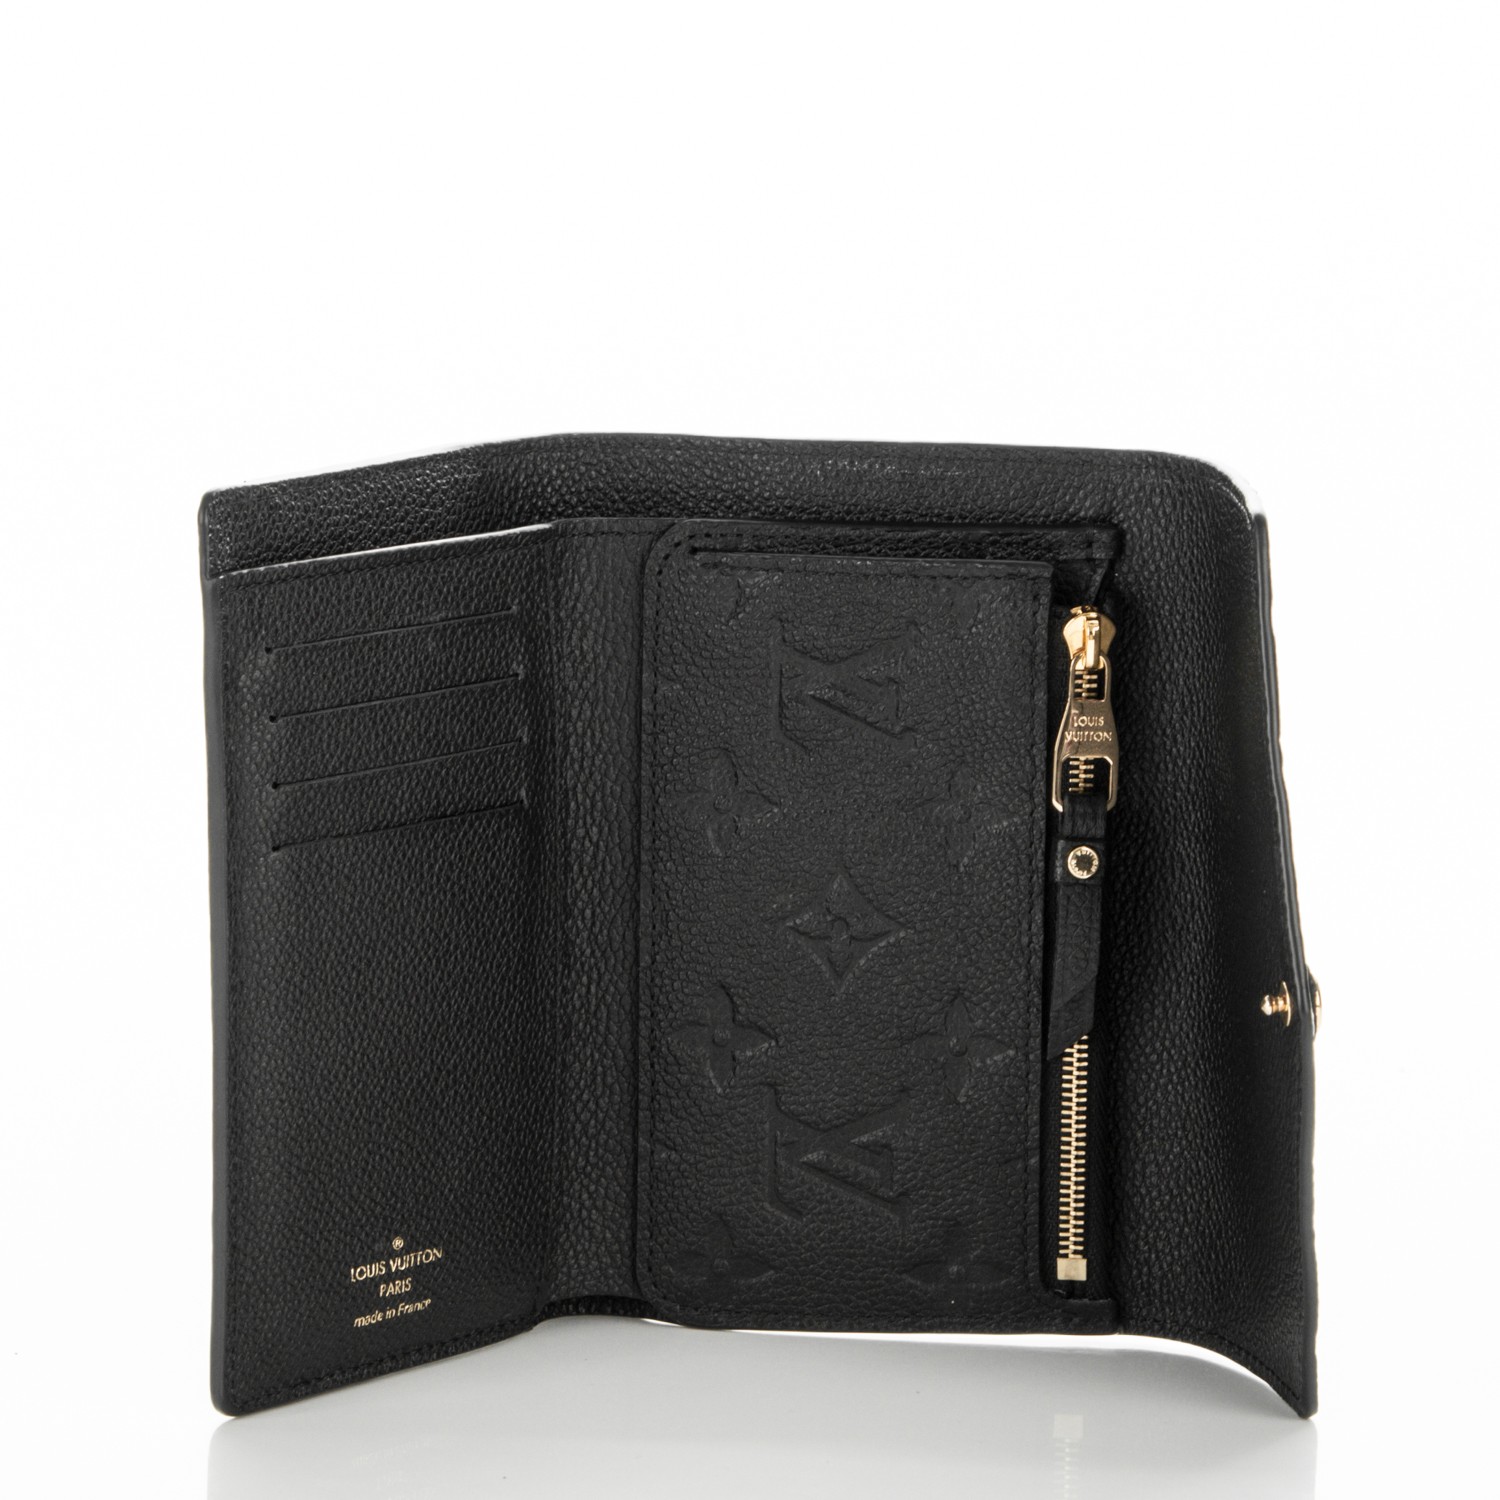 LOUIS VUITTON Empreinte Curieuse Compact Wallet Black 179939